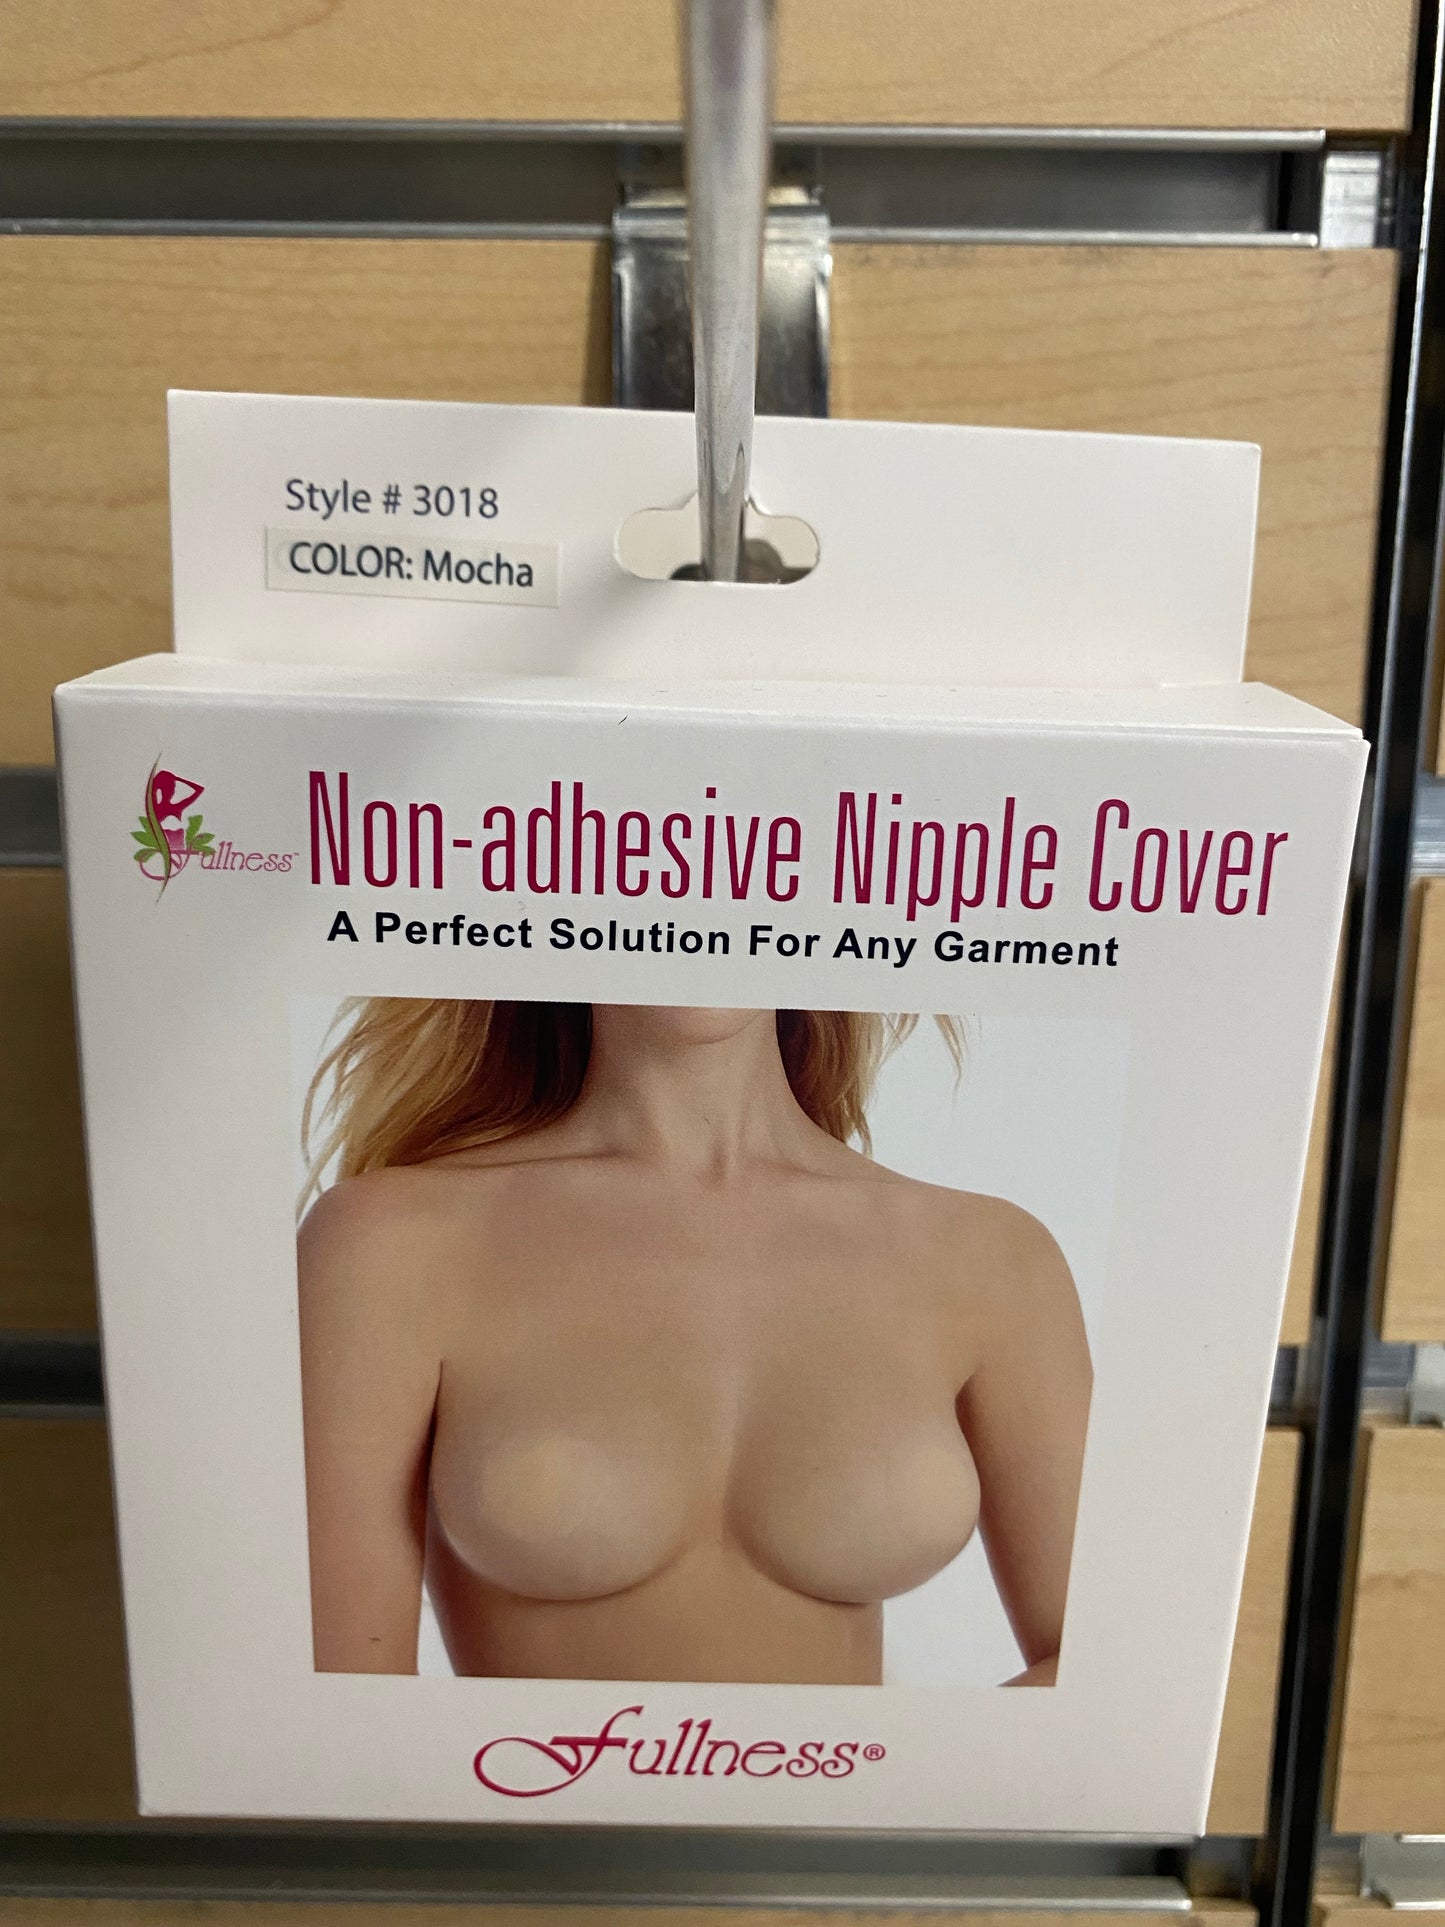 Non- adhesive nipple covers